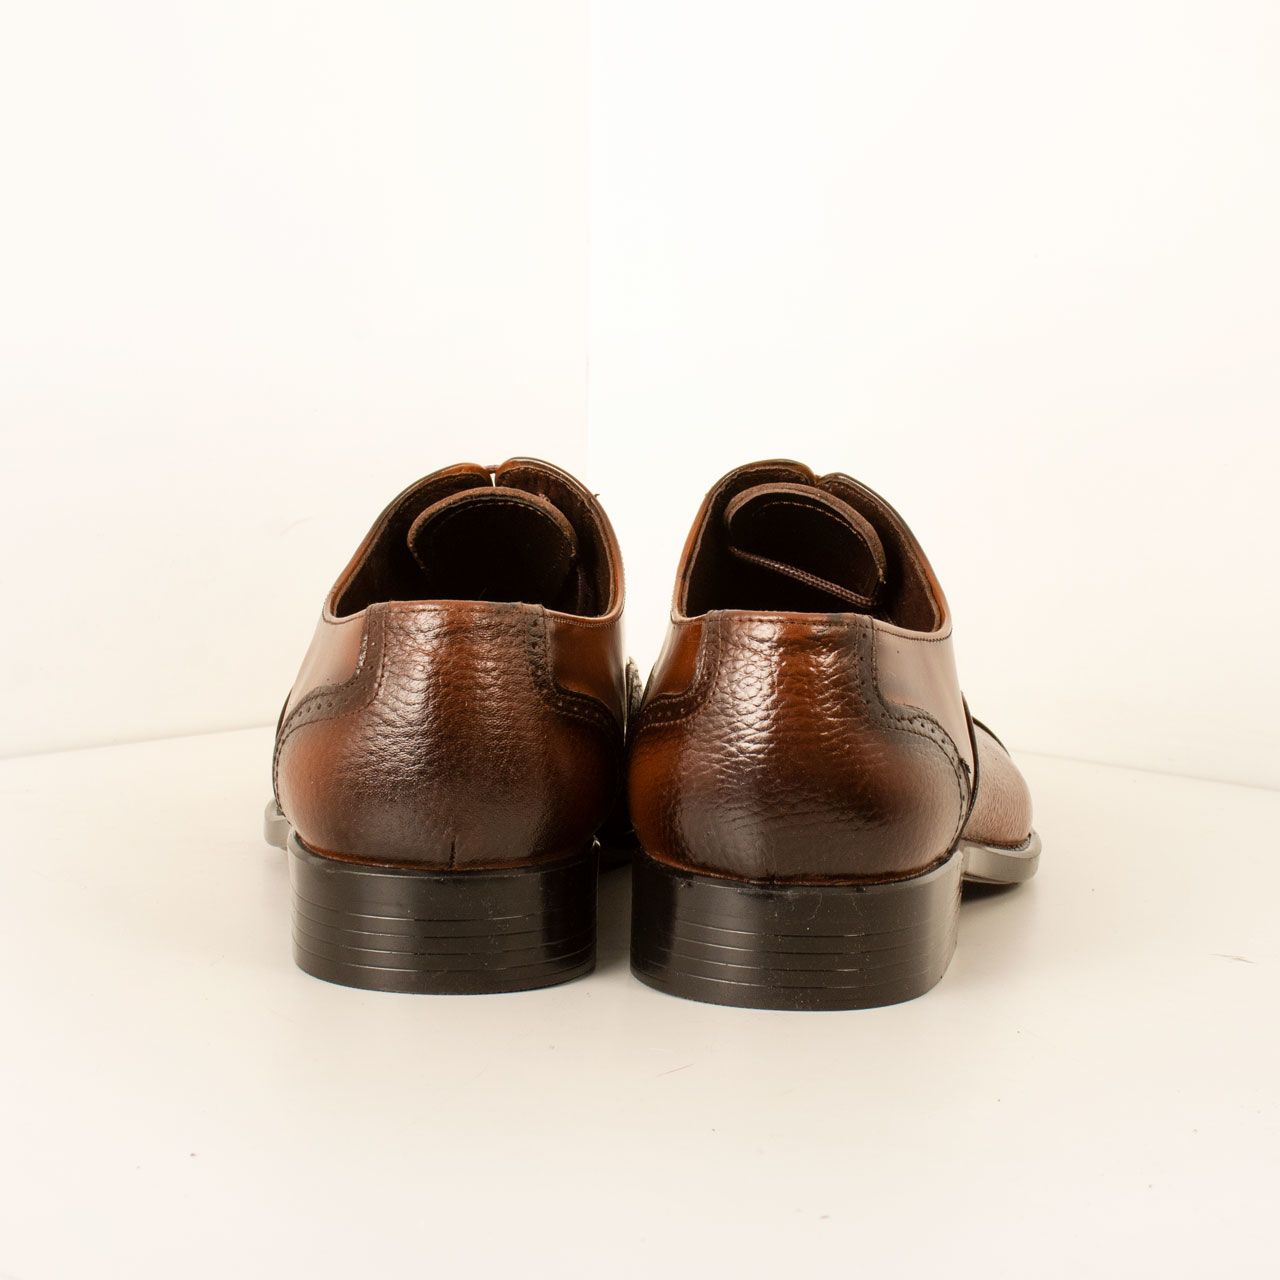  کفش مردانه پارینه چرم مدل SHO208-7 -  - 6